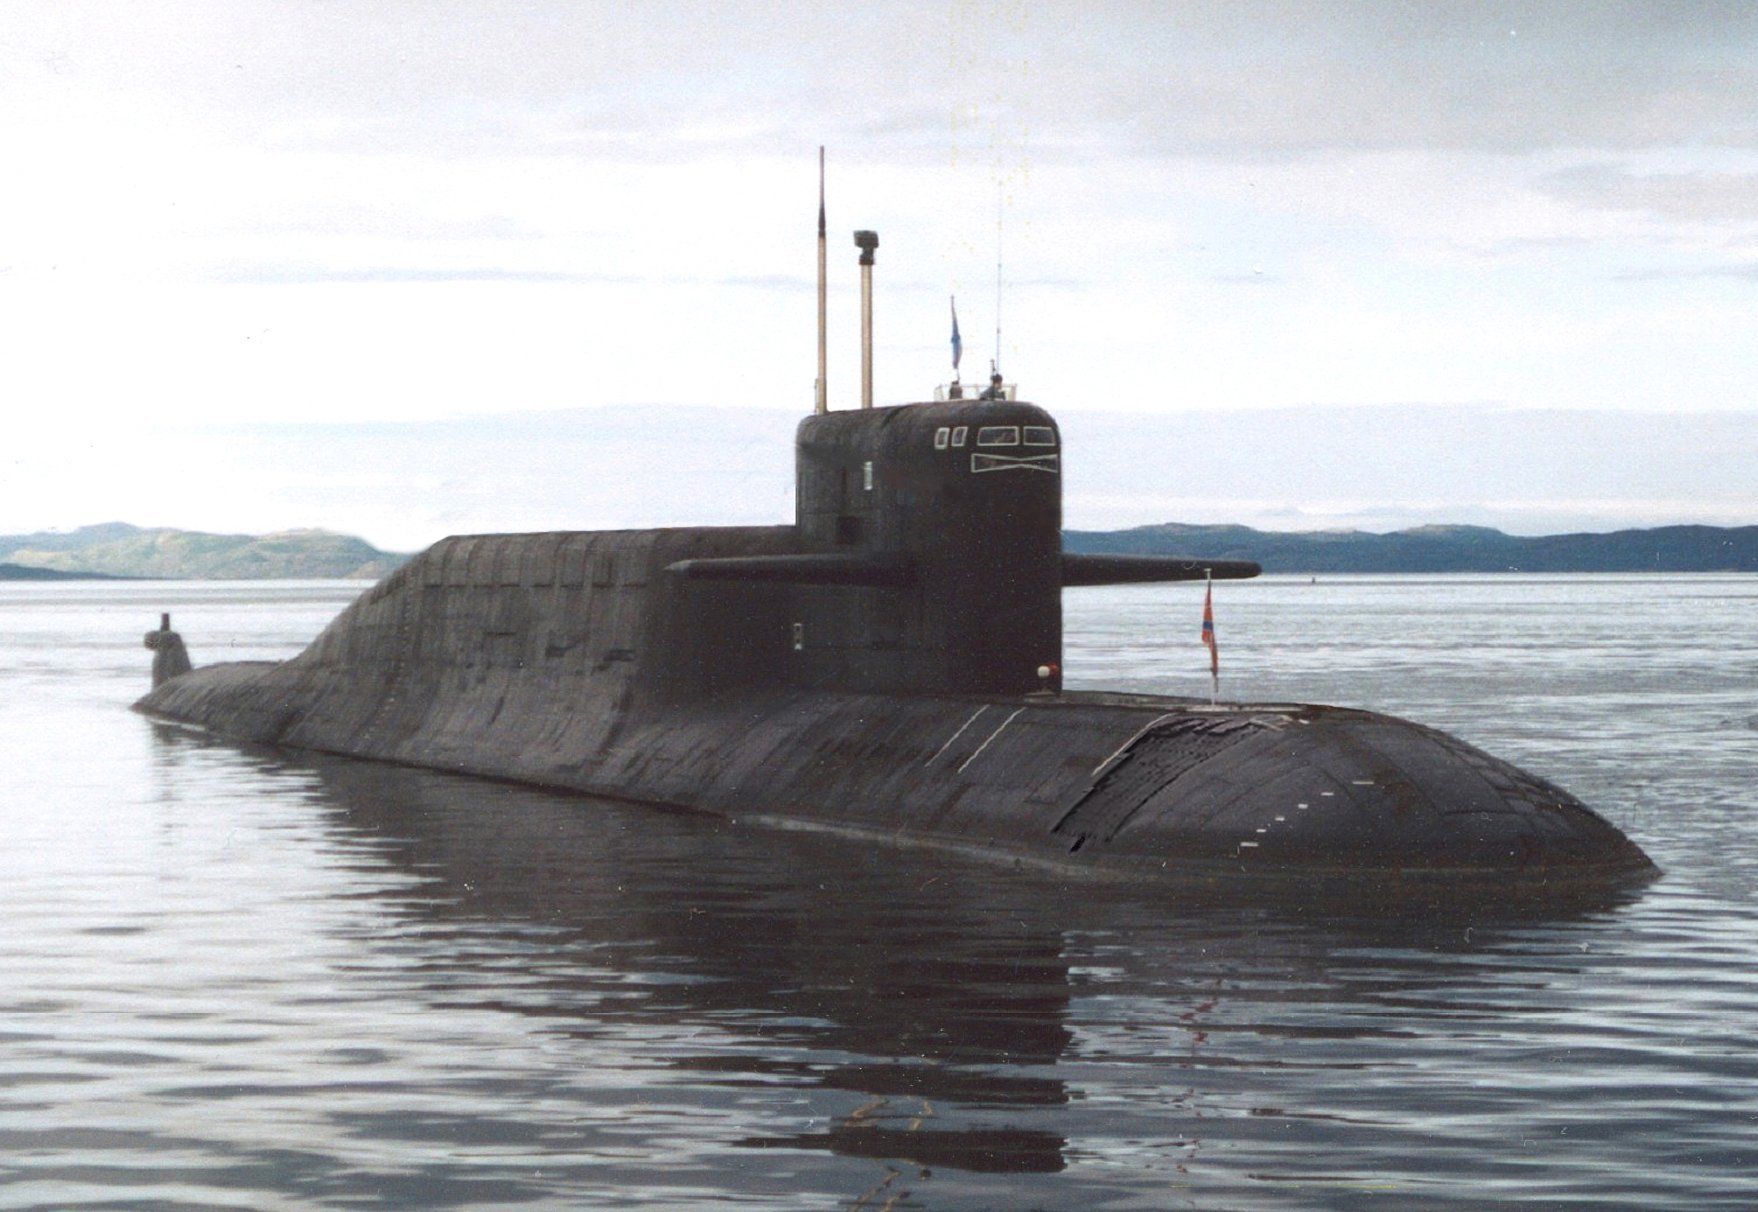 Пл ка. Подводная лодка 667бдрм "Дельфин". 667 БДРМ подводная лодка. АПЛ проекта 667 БДРМ. Проект 667 БДРМ Дельфин.